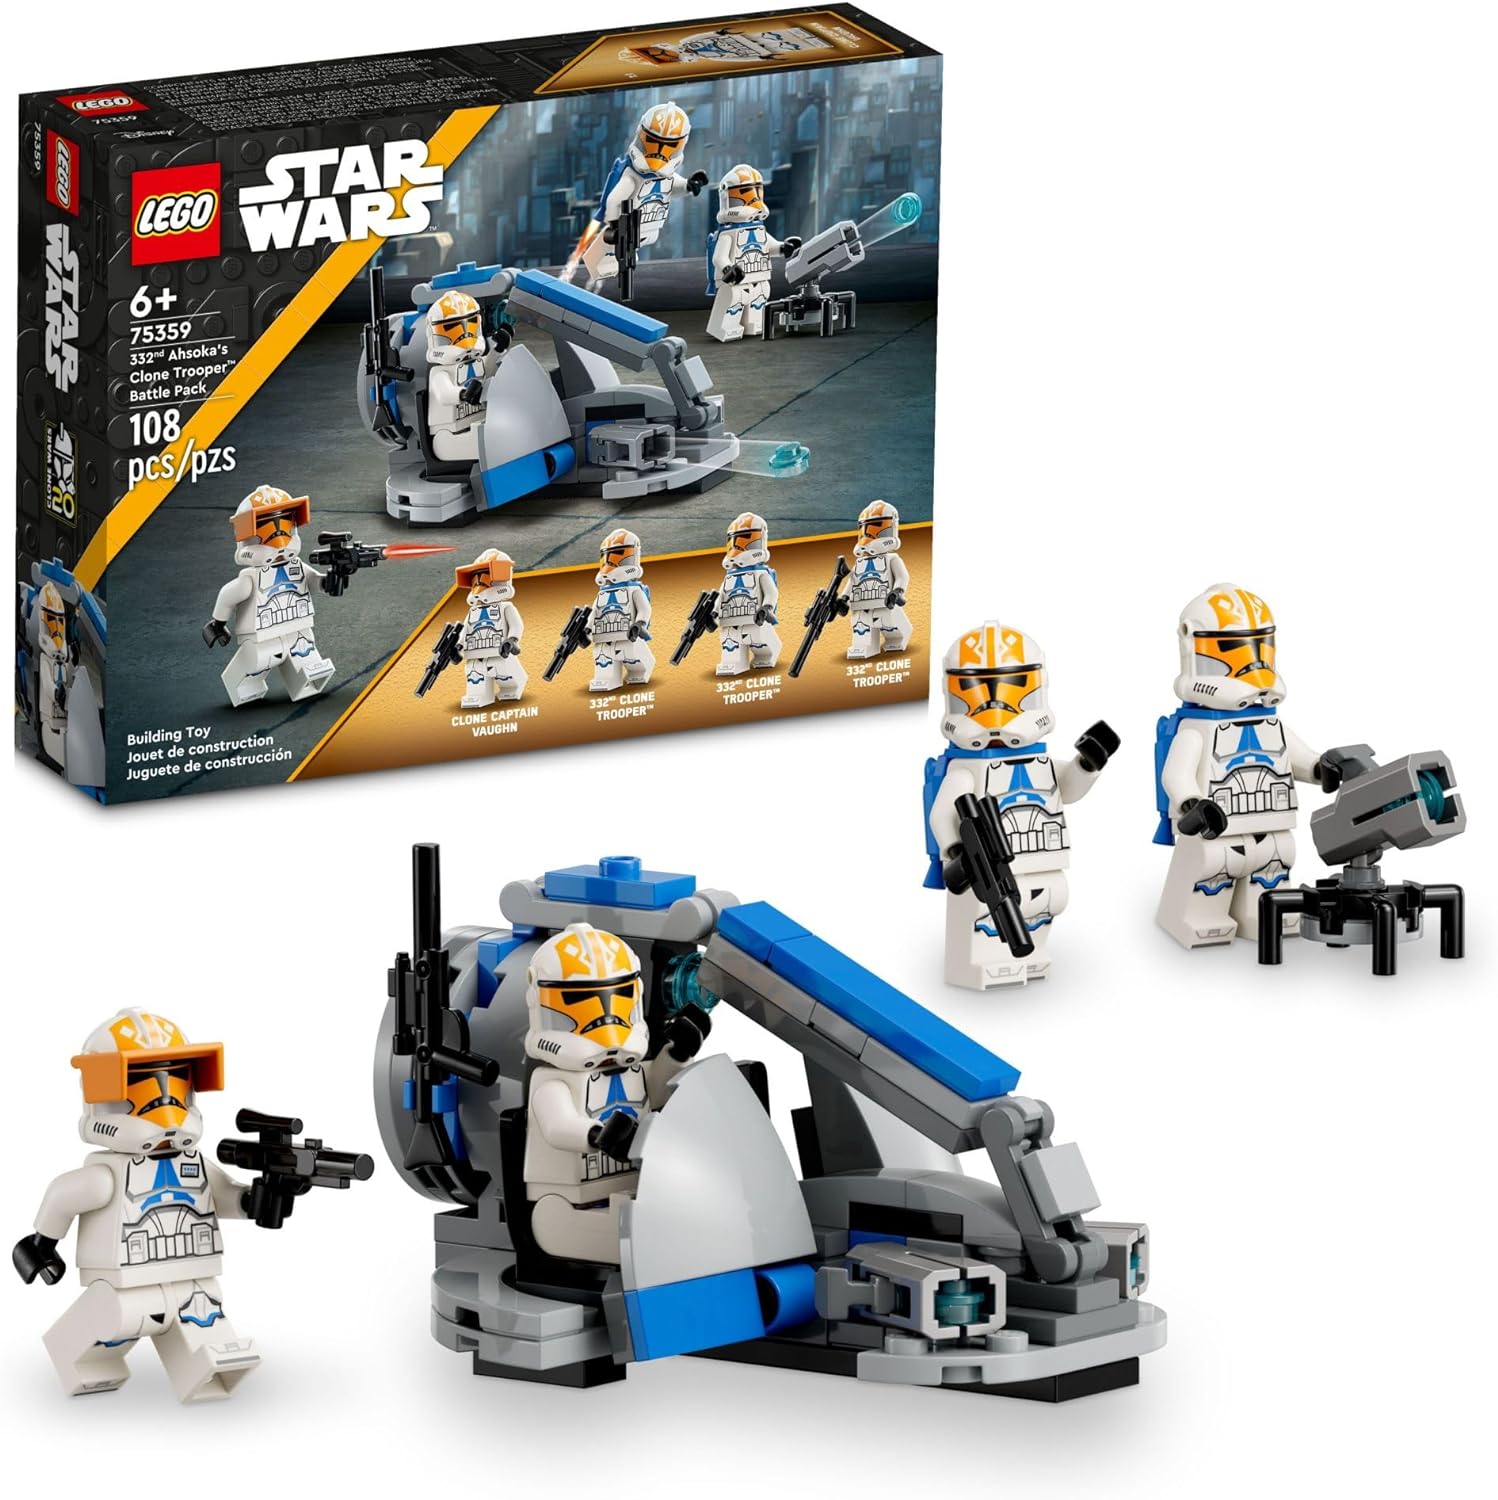 Lego Star Wars 332nd Ahsoka’s Clone Trooper Battle Pack 75359 Building Toy Set with 4 Star Wars Fi